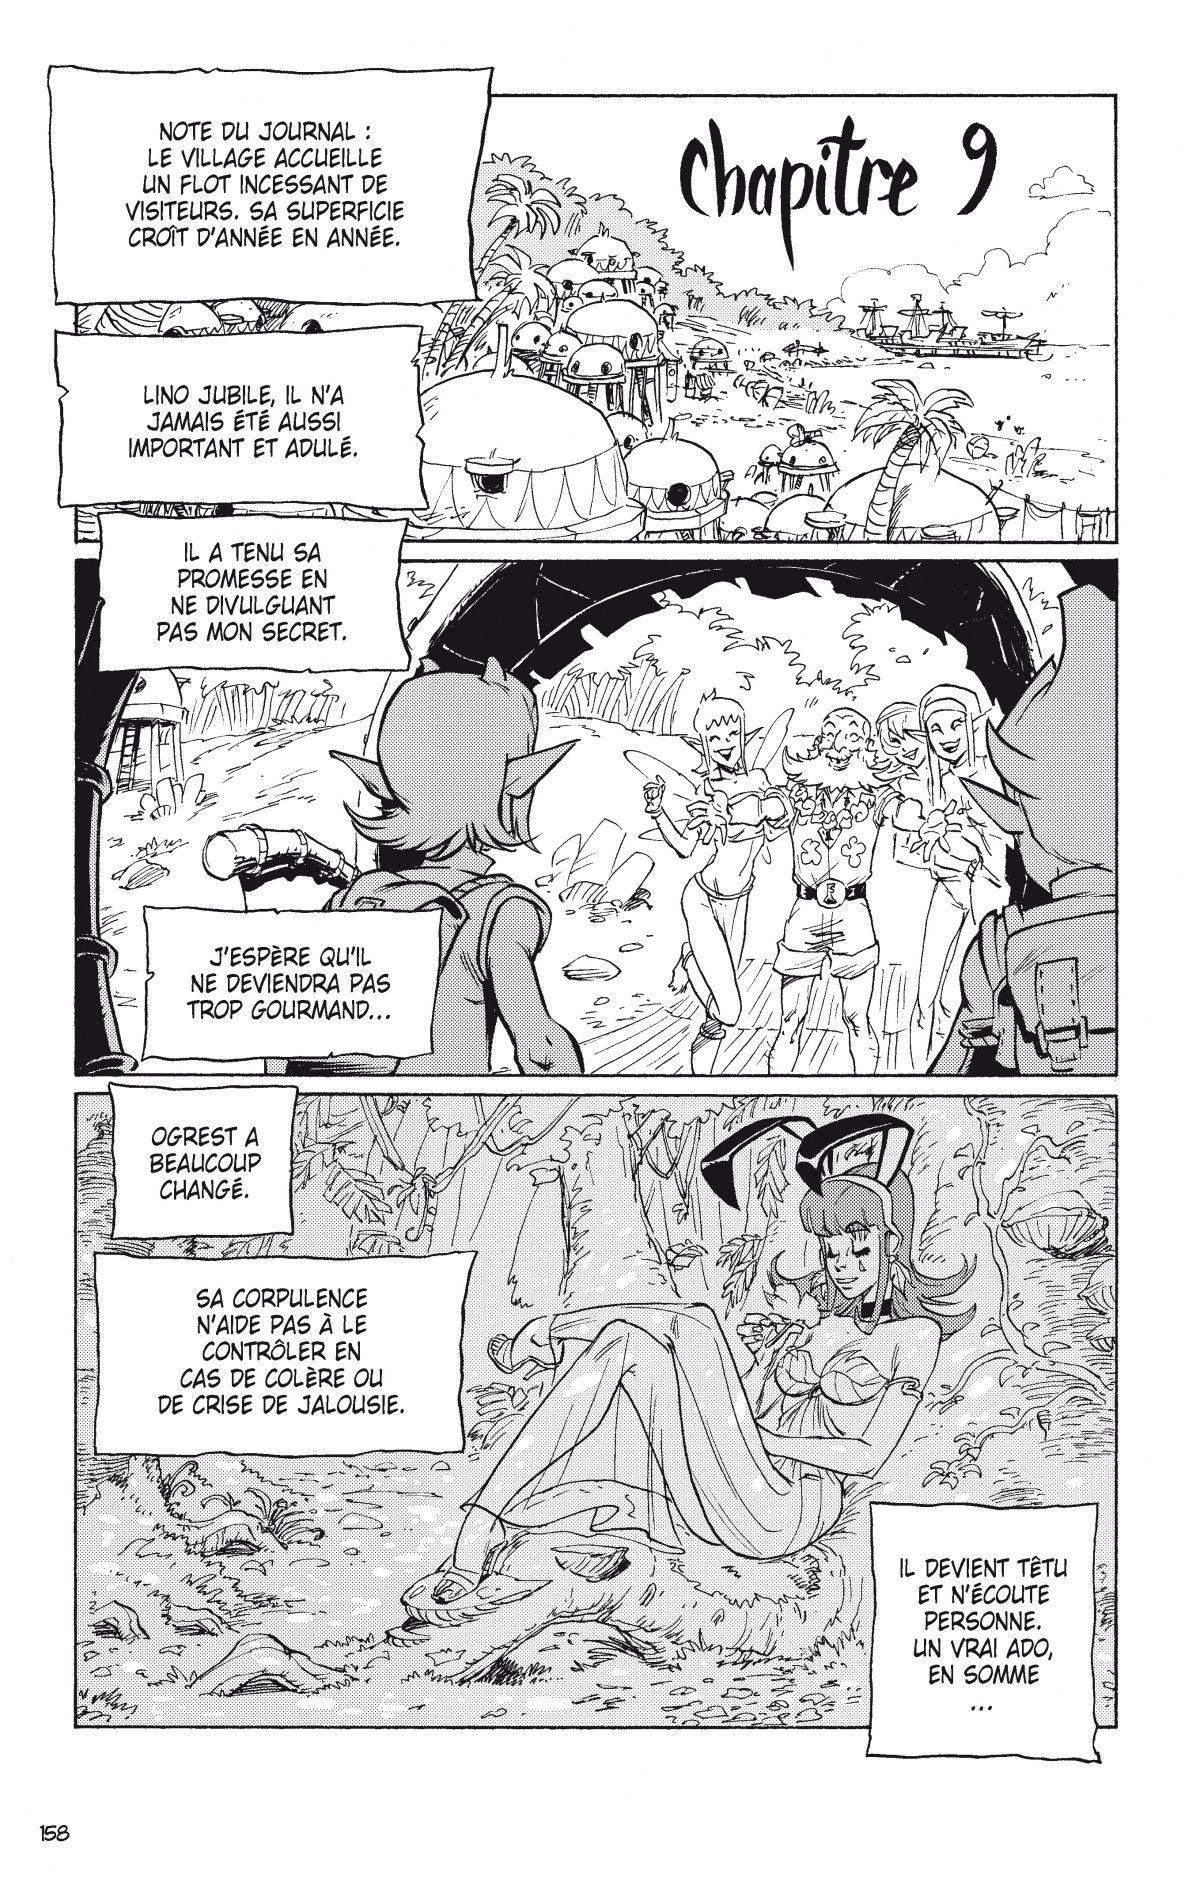 Ogrest: Chapter 9 - Page 1